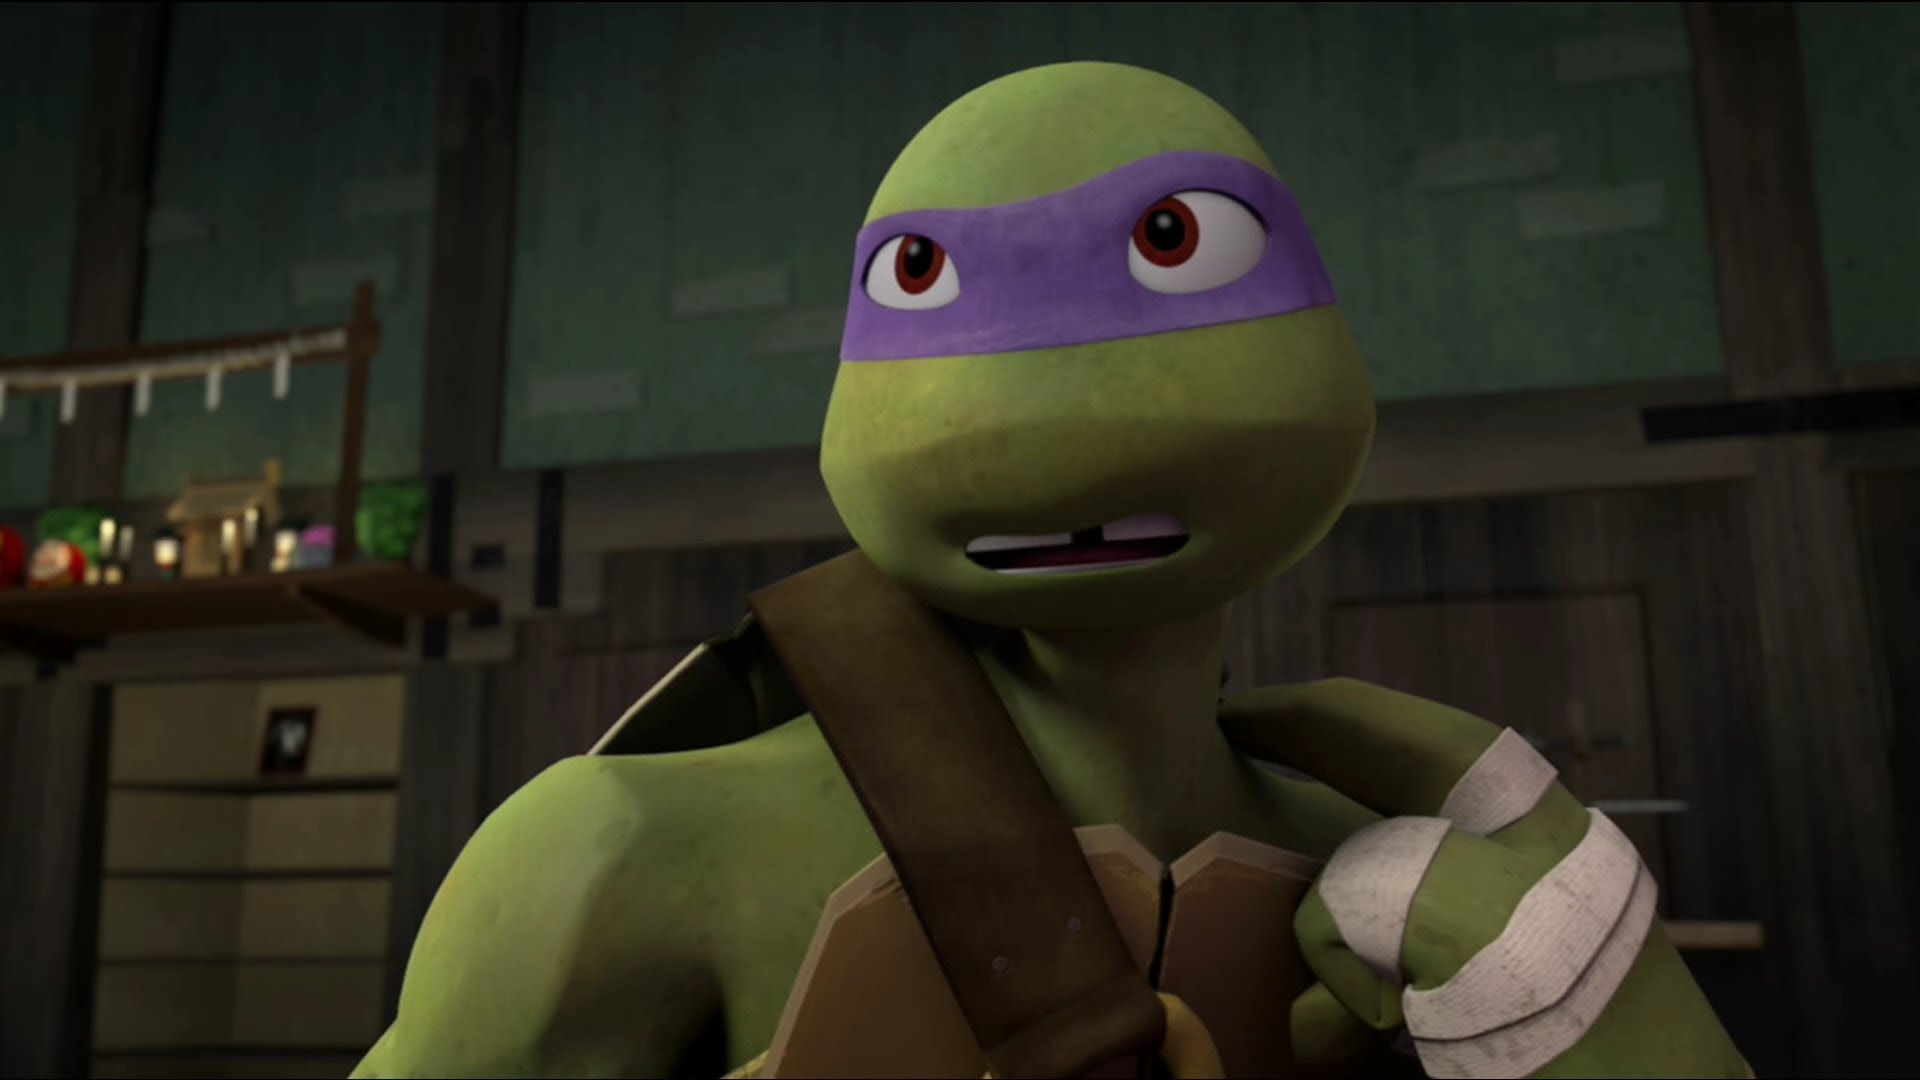 Teenage Mutant Ninja Turtles Donatello Toy Image Pictures by